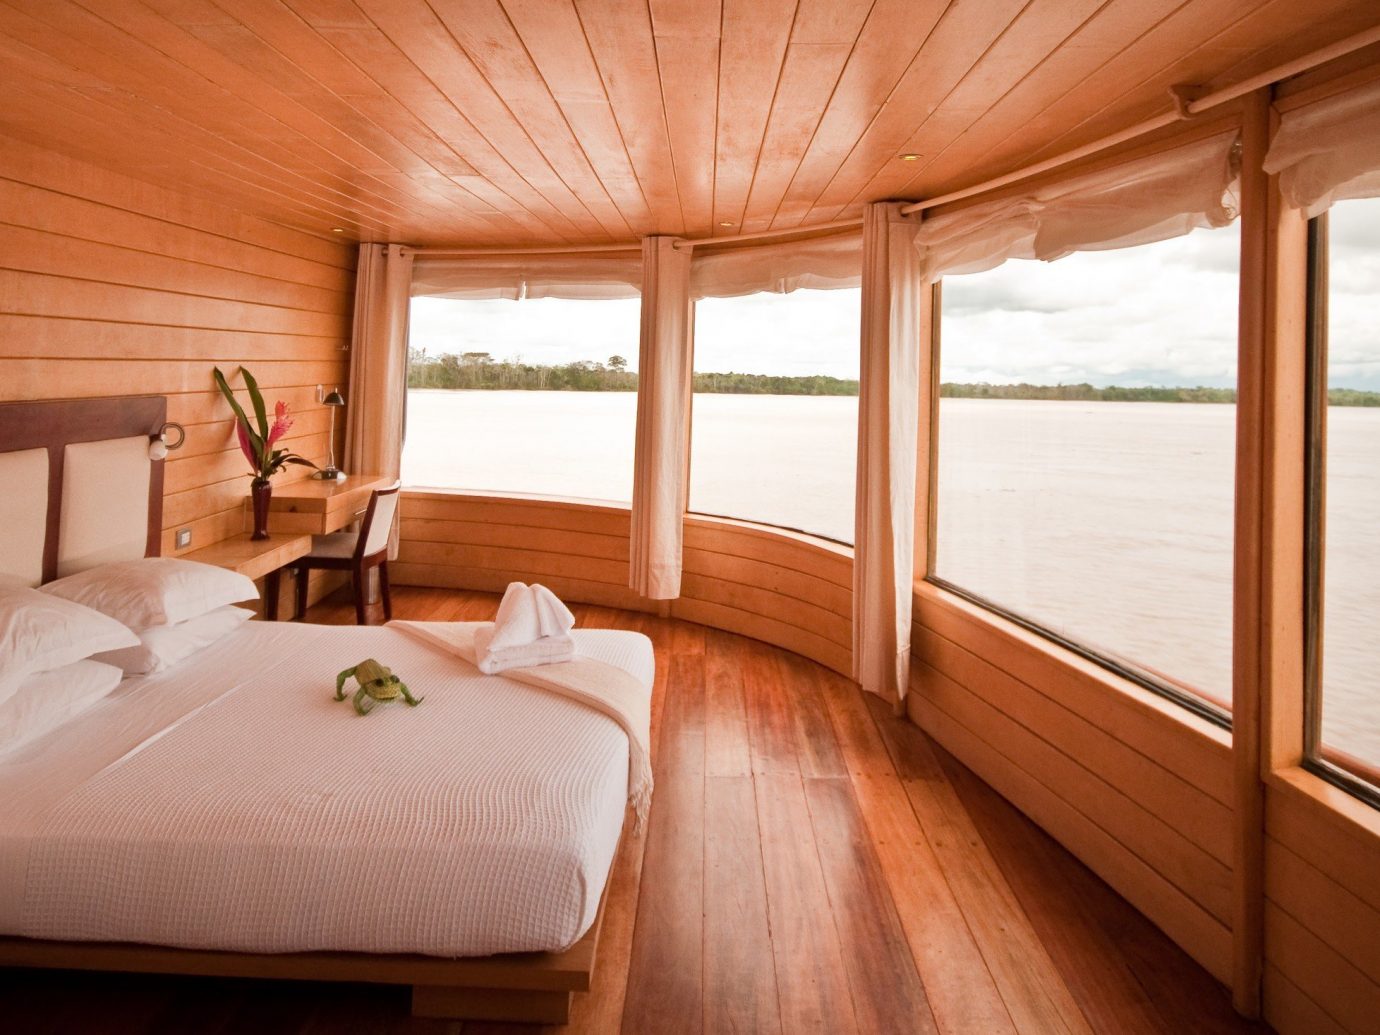 Trip Ideas indoor bed ceiling floor window room passenger ship hotel Bedroom yacht Boat ship vehicle estate watercraft cottage